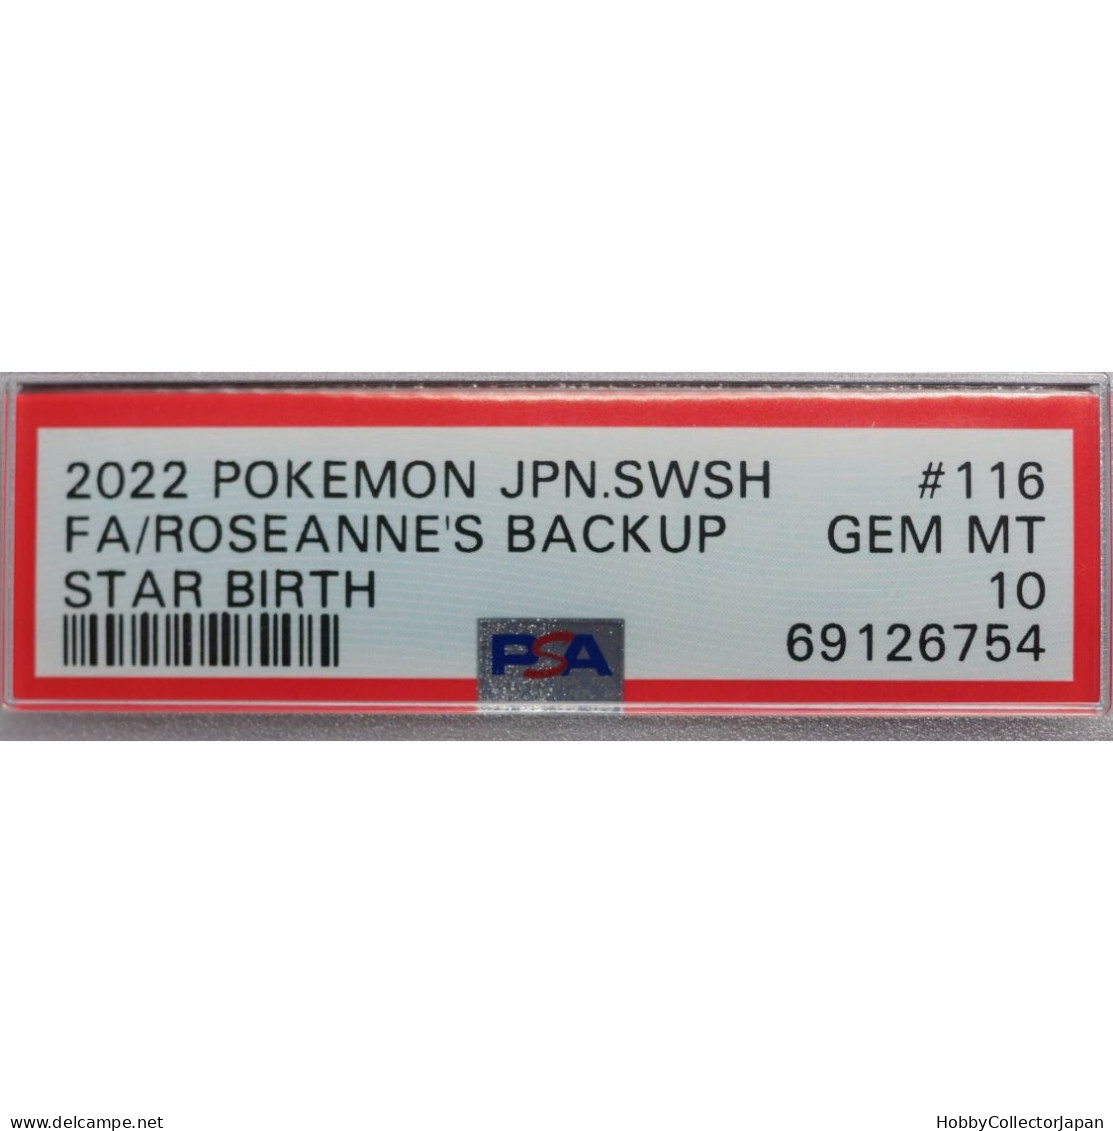 ROSEANNES'S BACKUP S9 F 116/100 SR PSA10 - Spada E Scudo